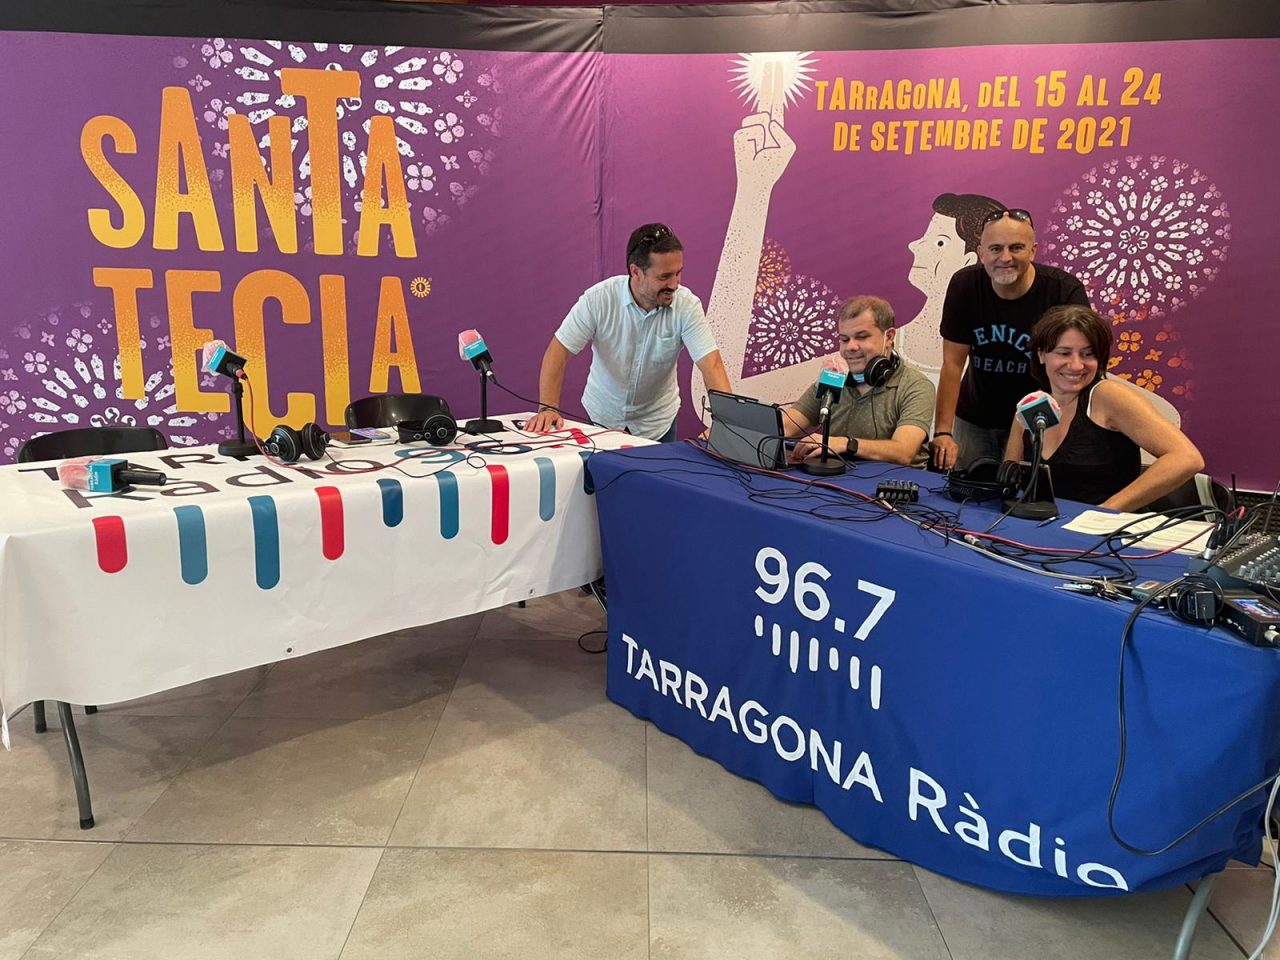 Tarragona-Ràdio-Santa-Tecla-2021-1280x960.jpg